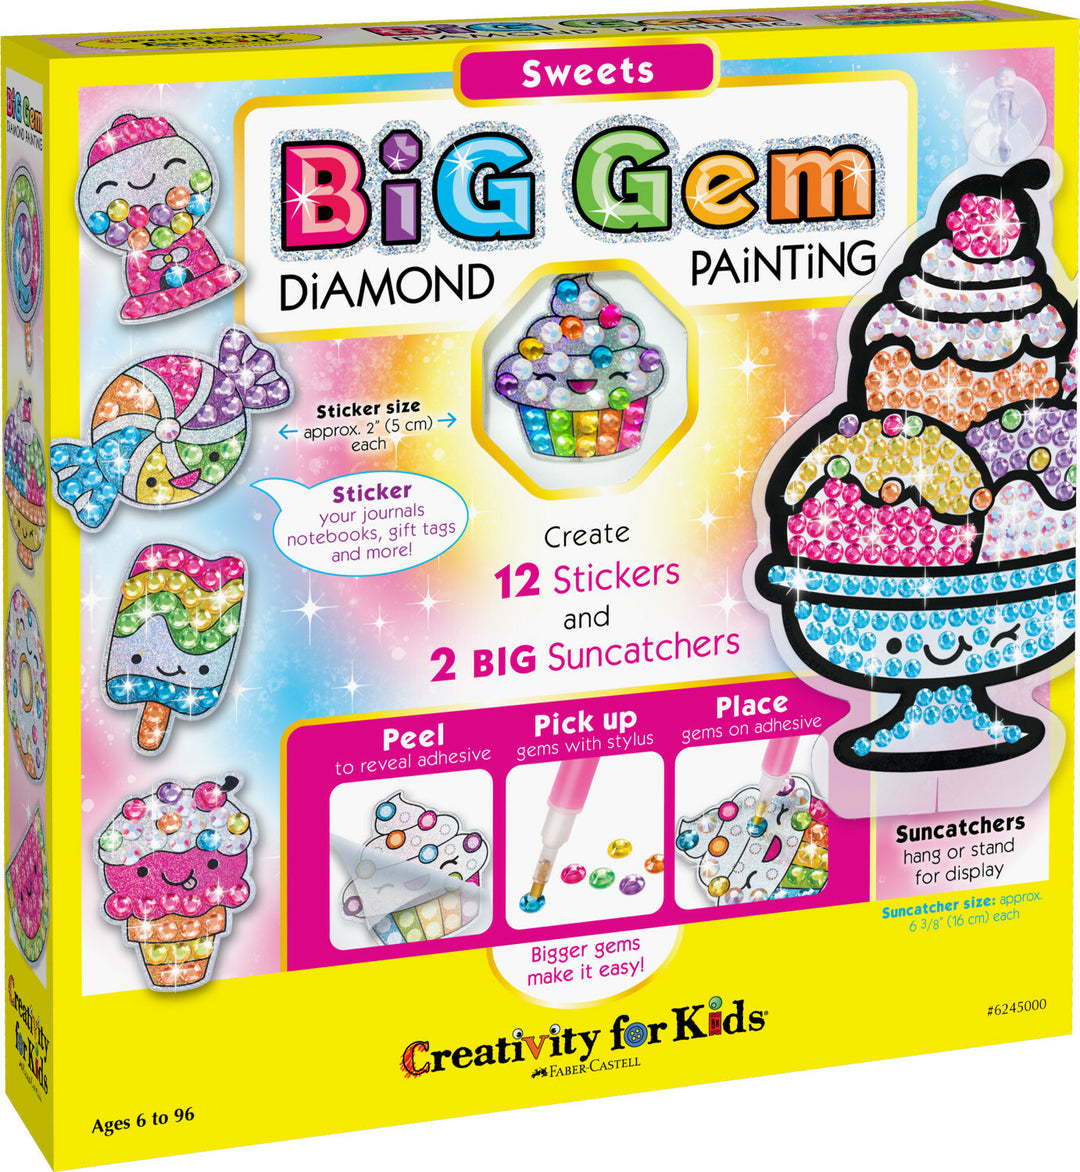 Big Gem Diamond Painting – Sweets